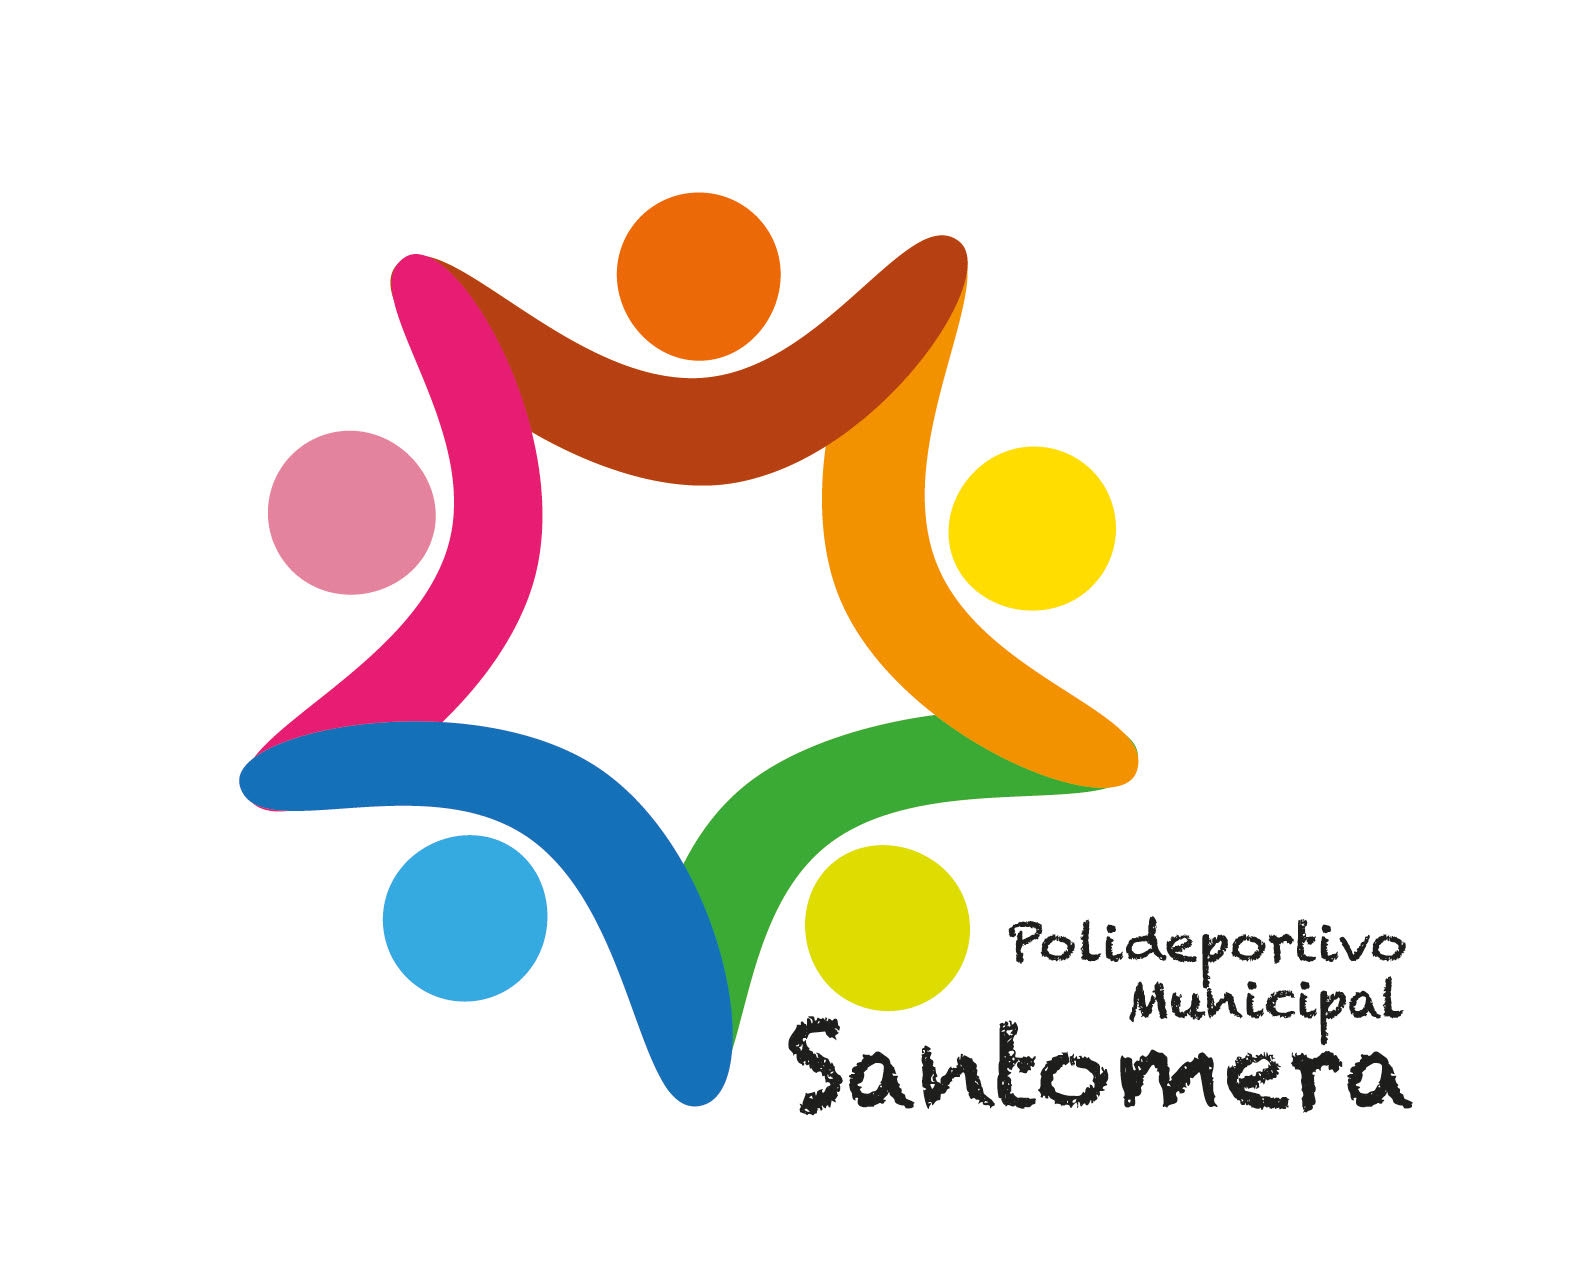 Polideportivo de Santomera